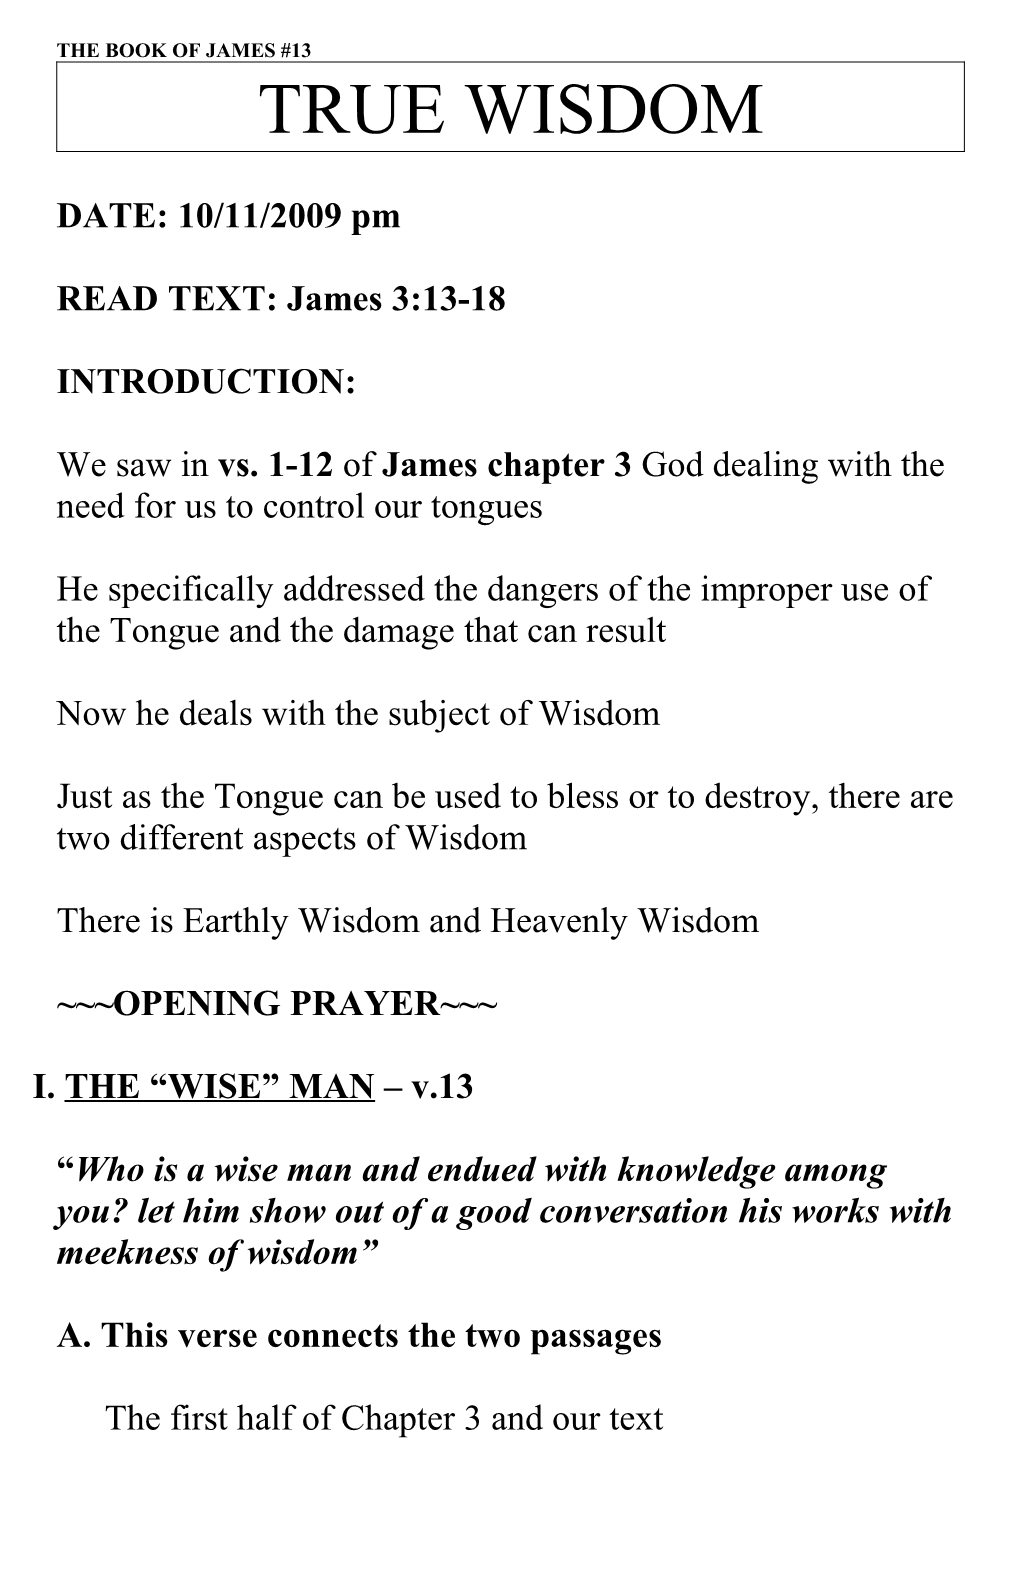 READ TEXT: James 3:13-18